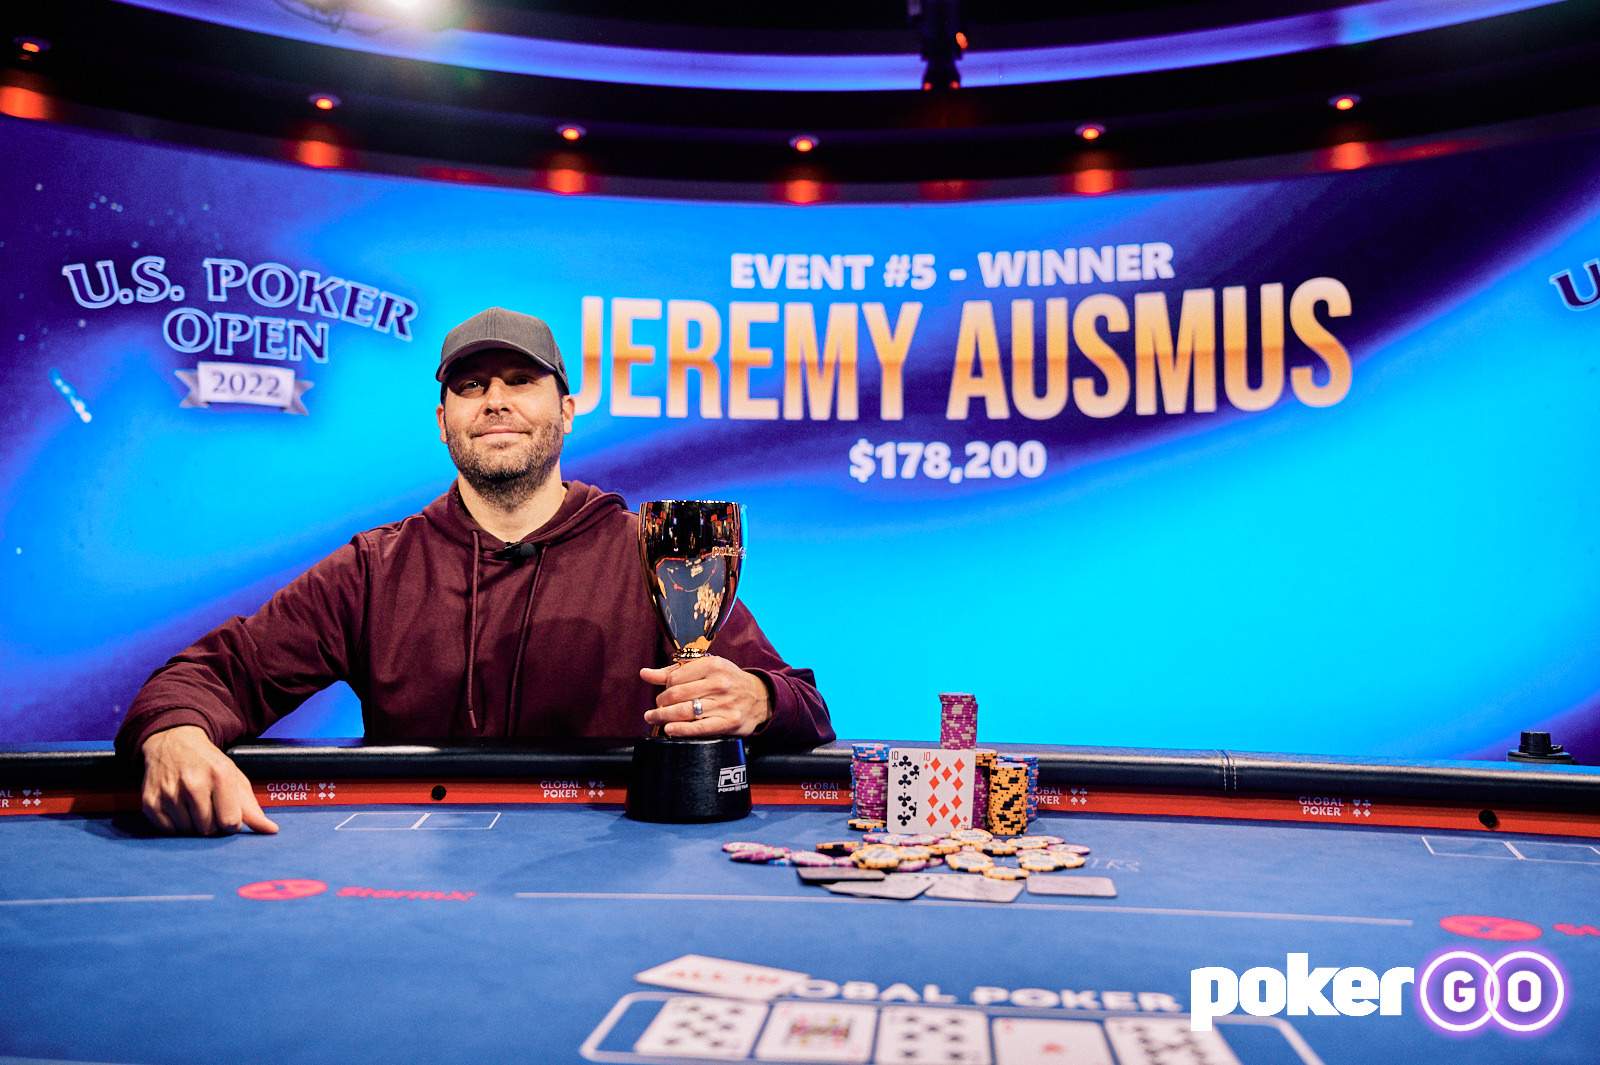 Jeremy Ausmus Wins U.S. Poker Open Event #5 For $178,200